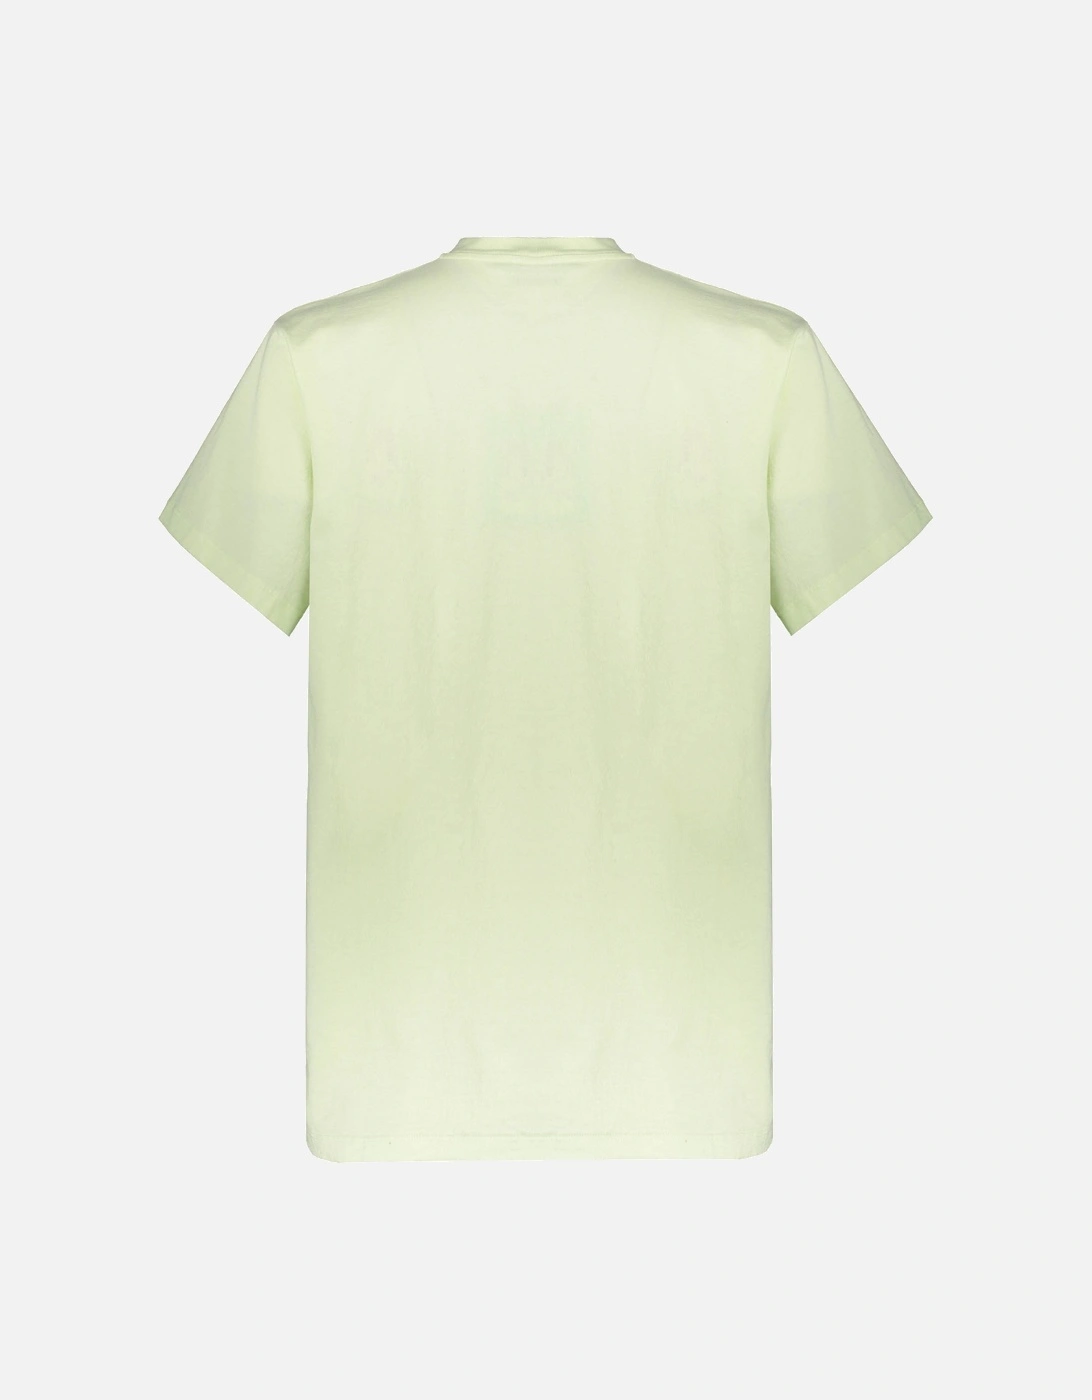 Temple T-Shirt - Pastel Green